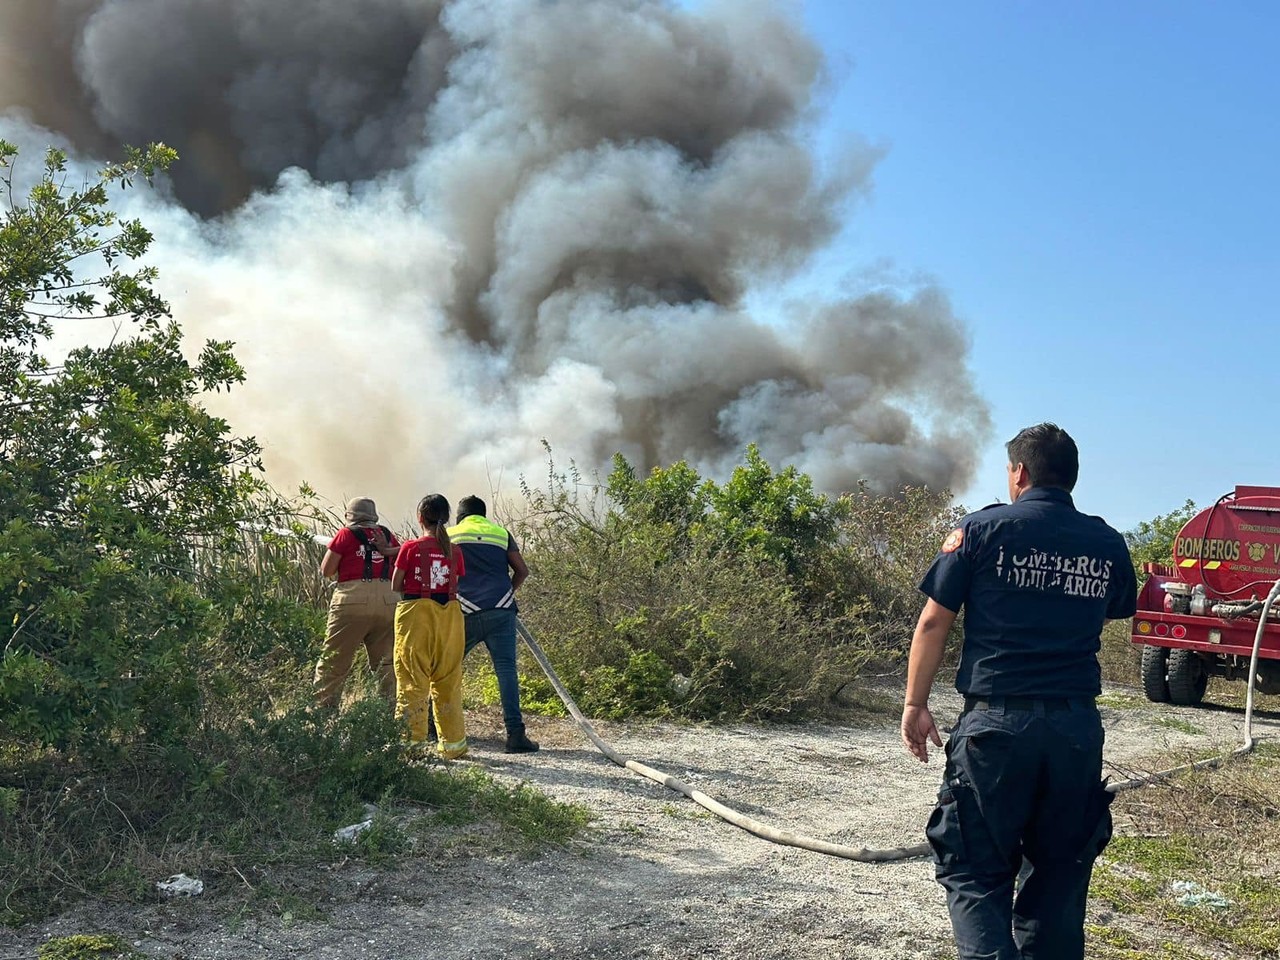 Bomberos Voluntarios de Tamaulipas AC alertan de quema irresponsable de basura